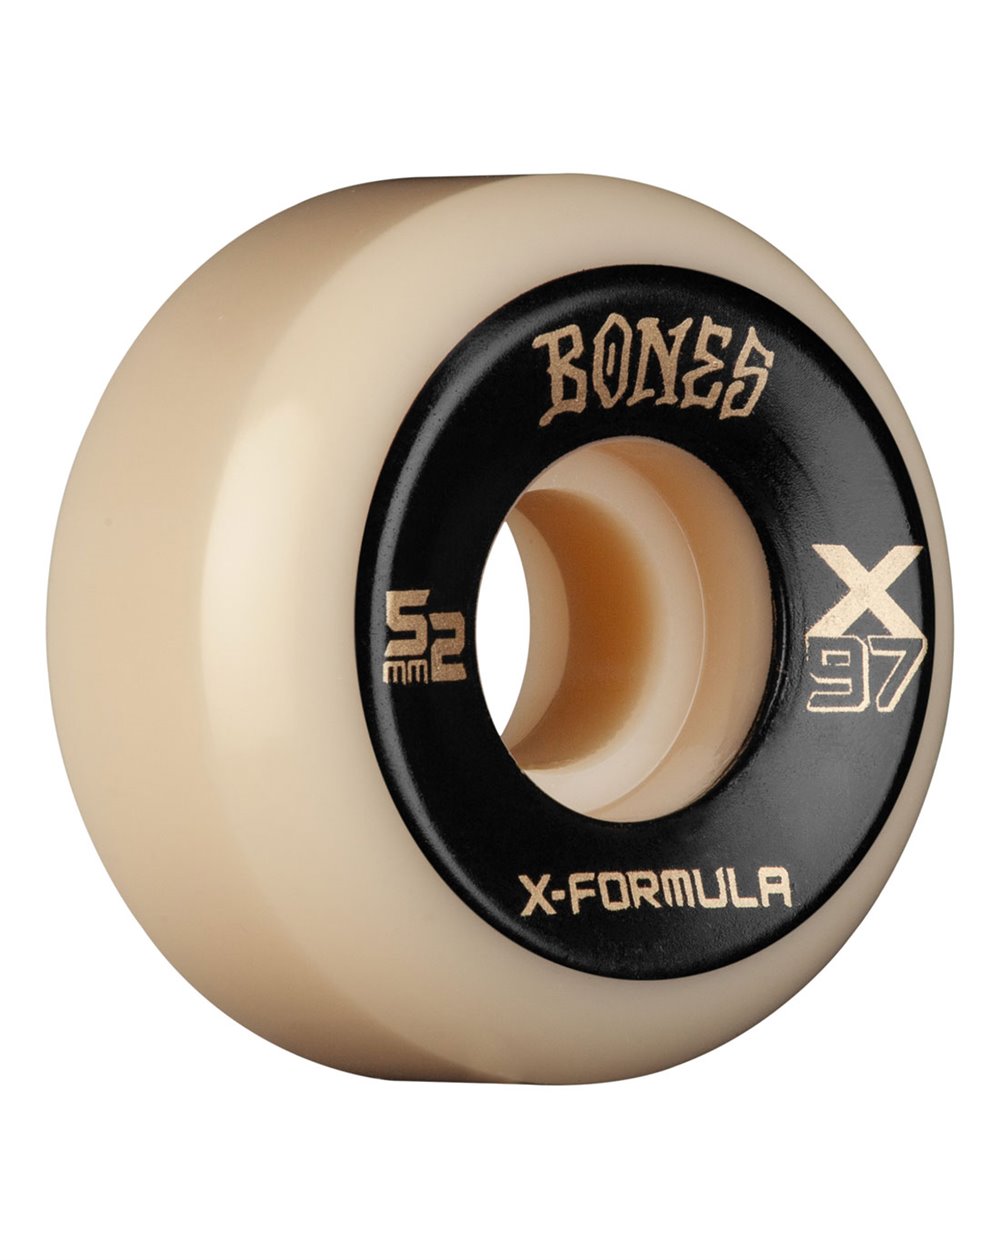 Bones Wheels Rodas Skate X-Formula V5 Sidecut X-Ninety-Seven 52mm 97A 4 peças